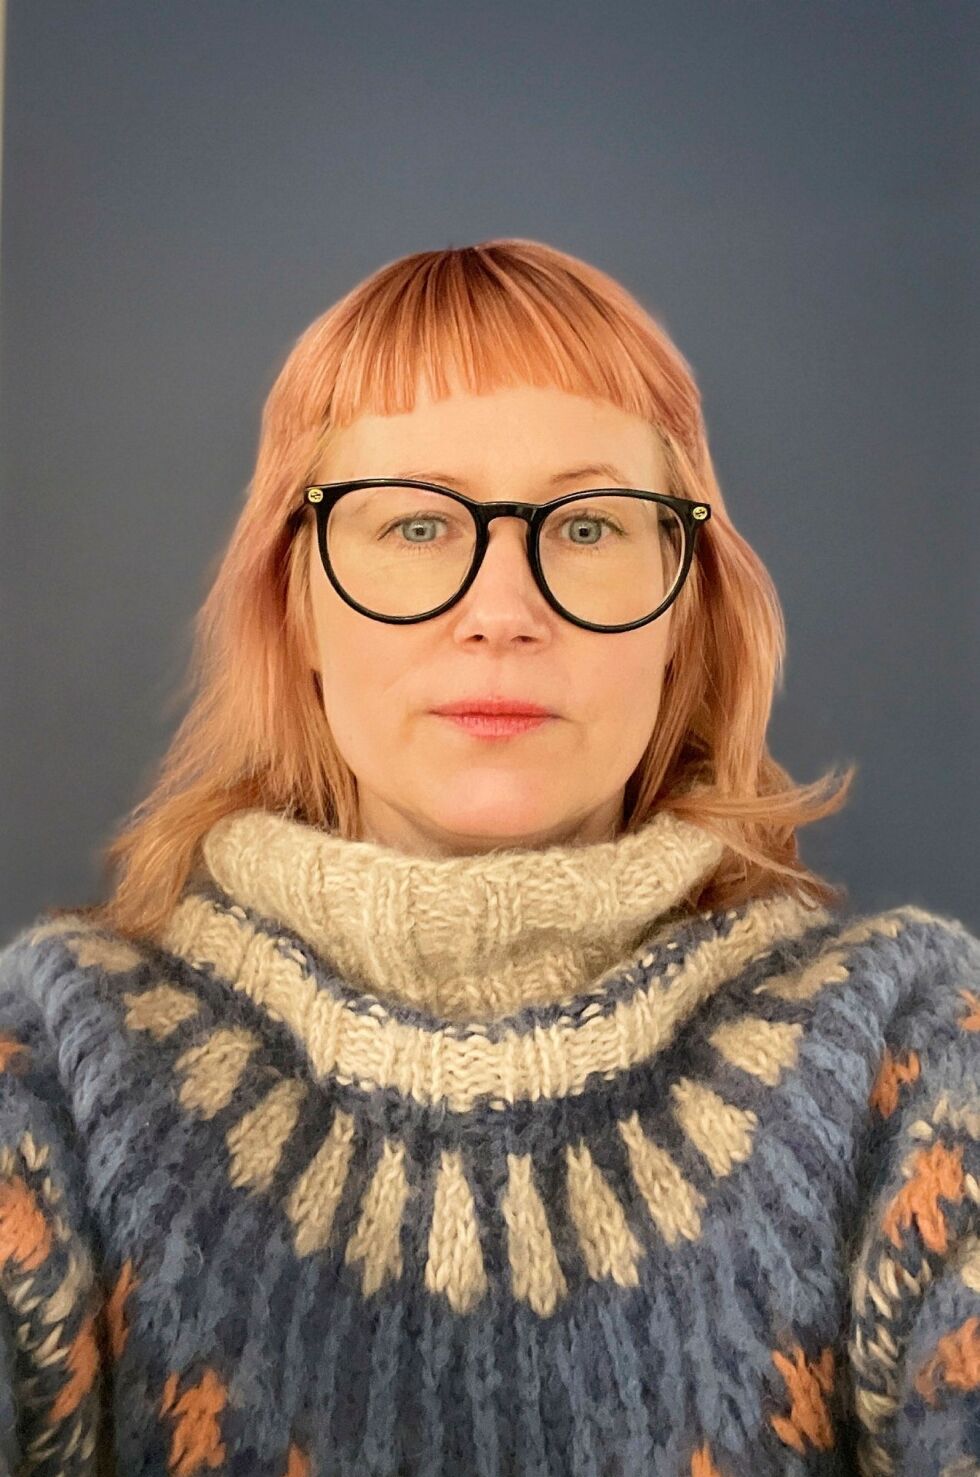 Emma Gunnarsson er tilsatt som formidler ved Nordkappmuseet.
 Foto: Privat